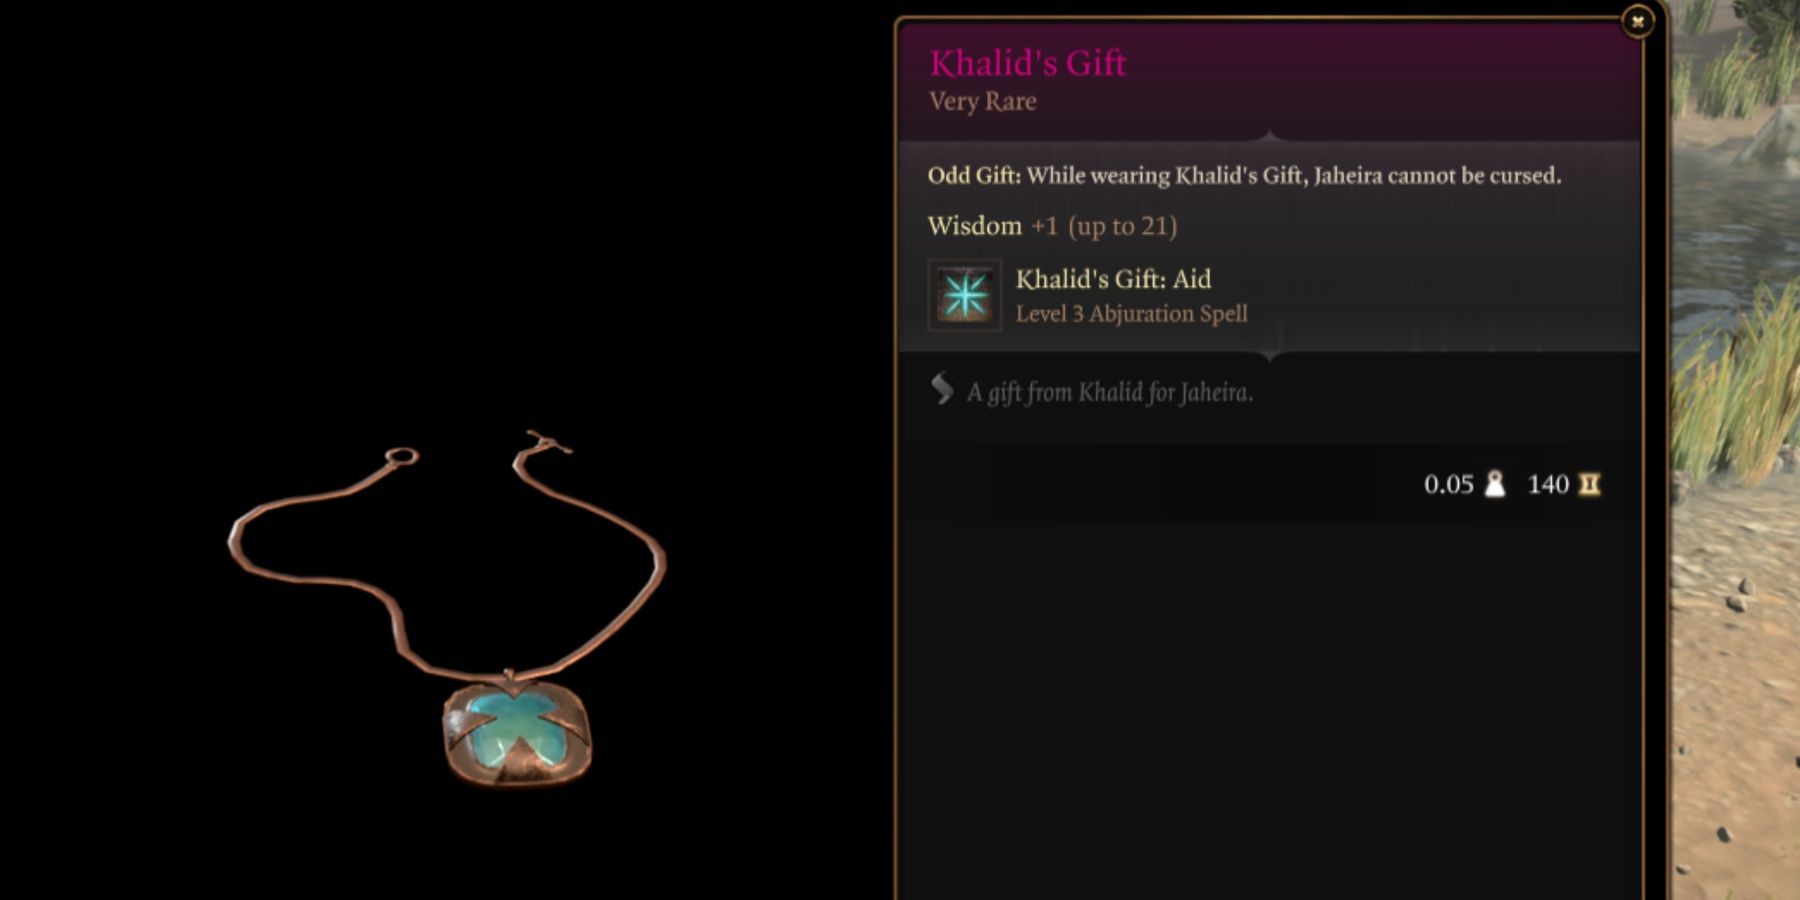 BG3 Khalid's Gift in-game item menu description